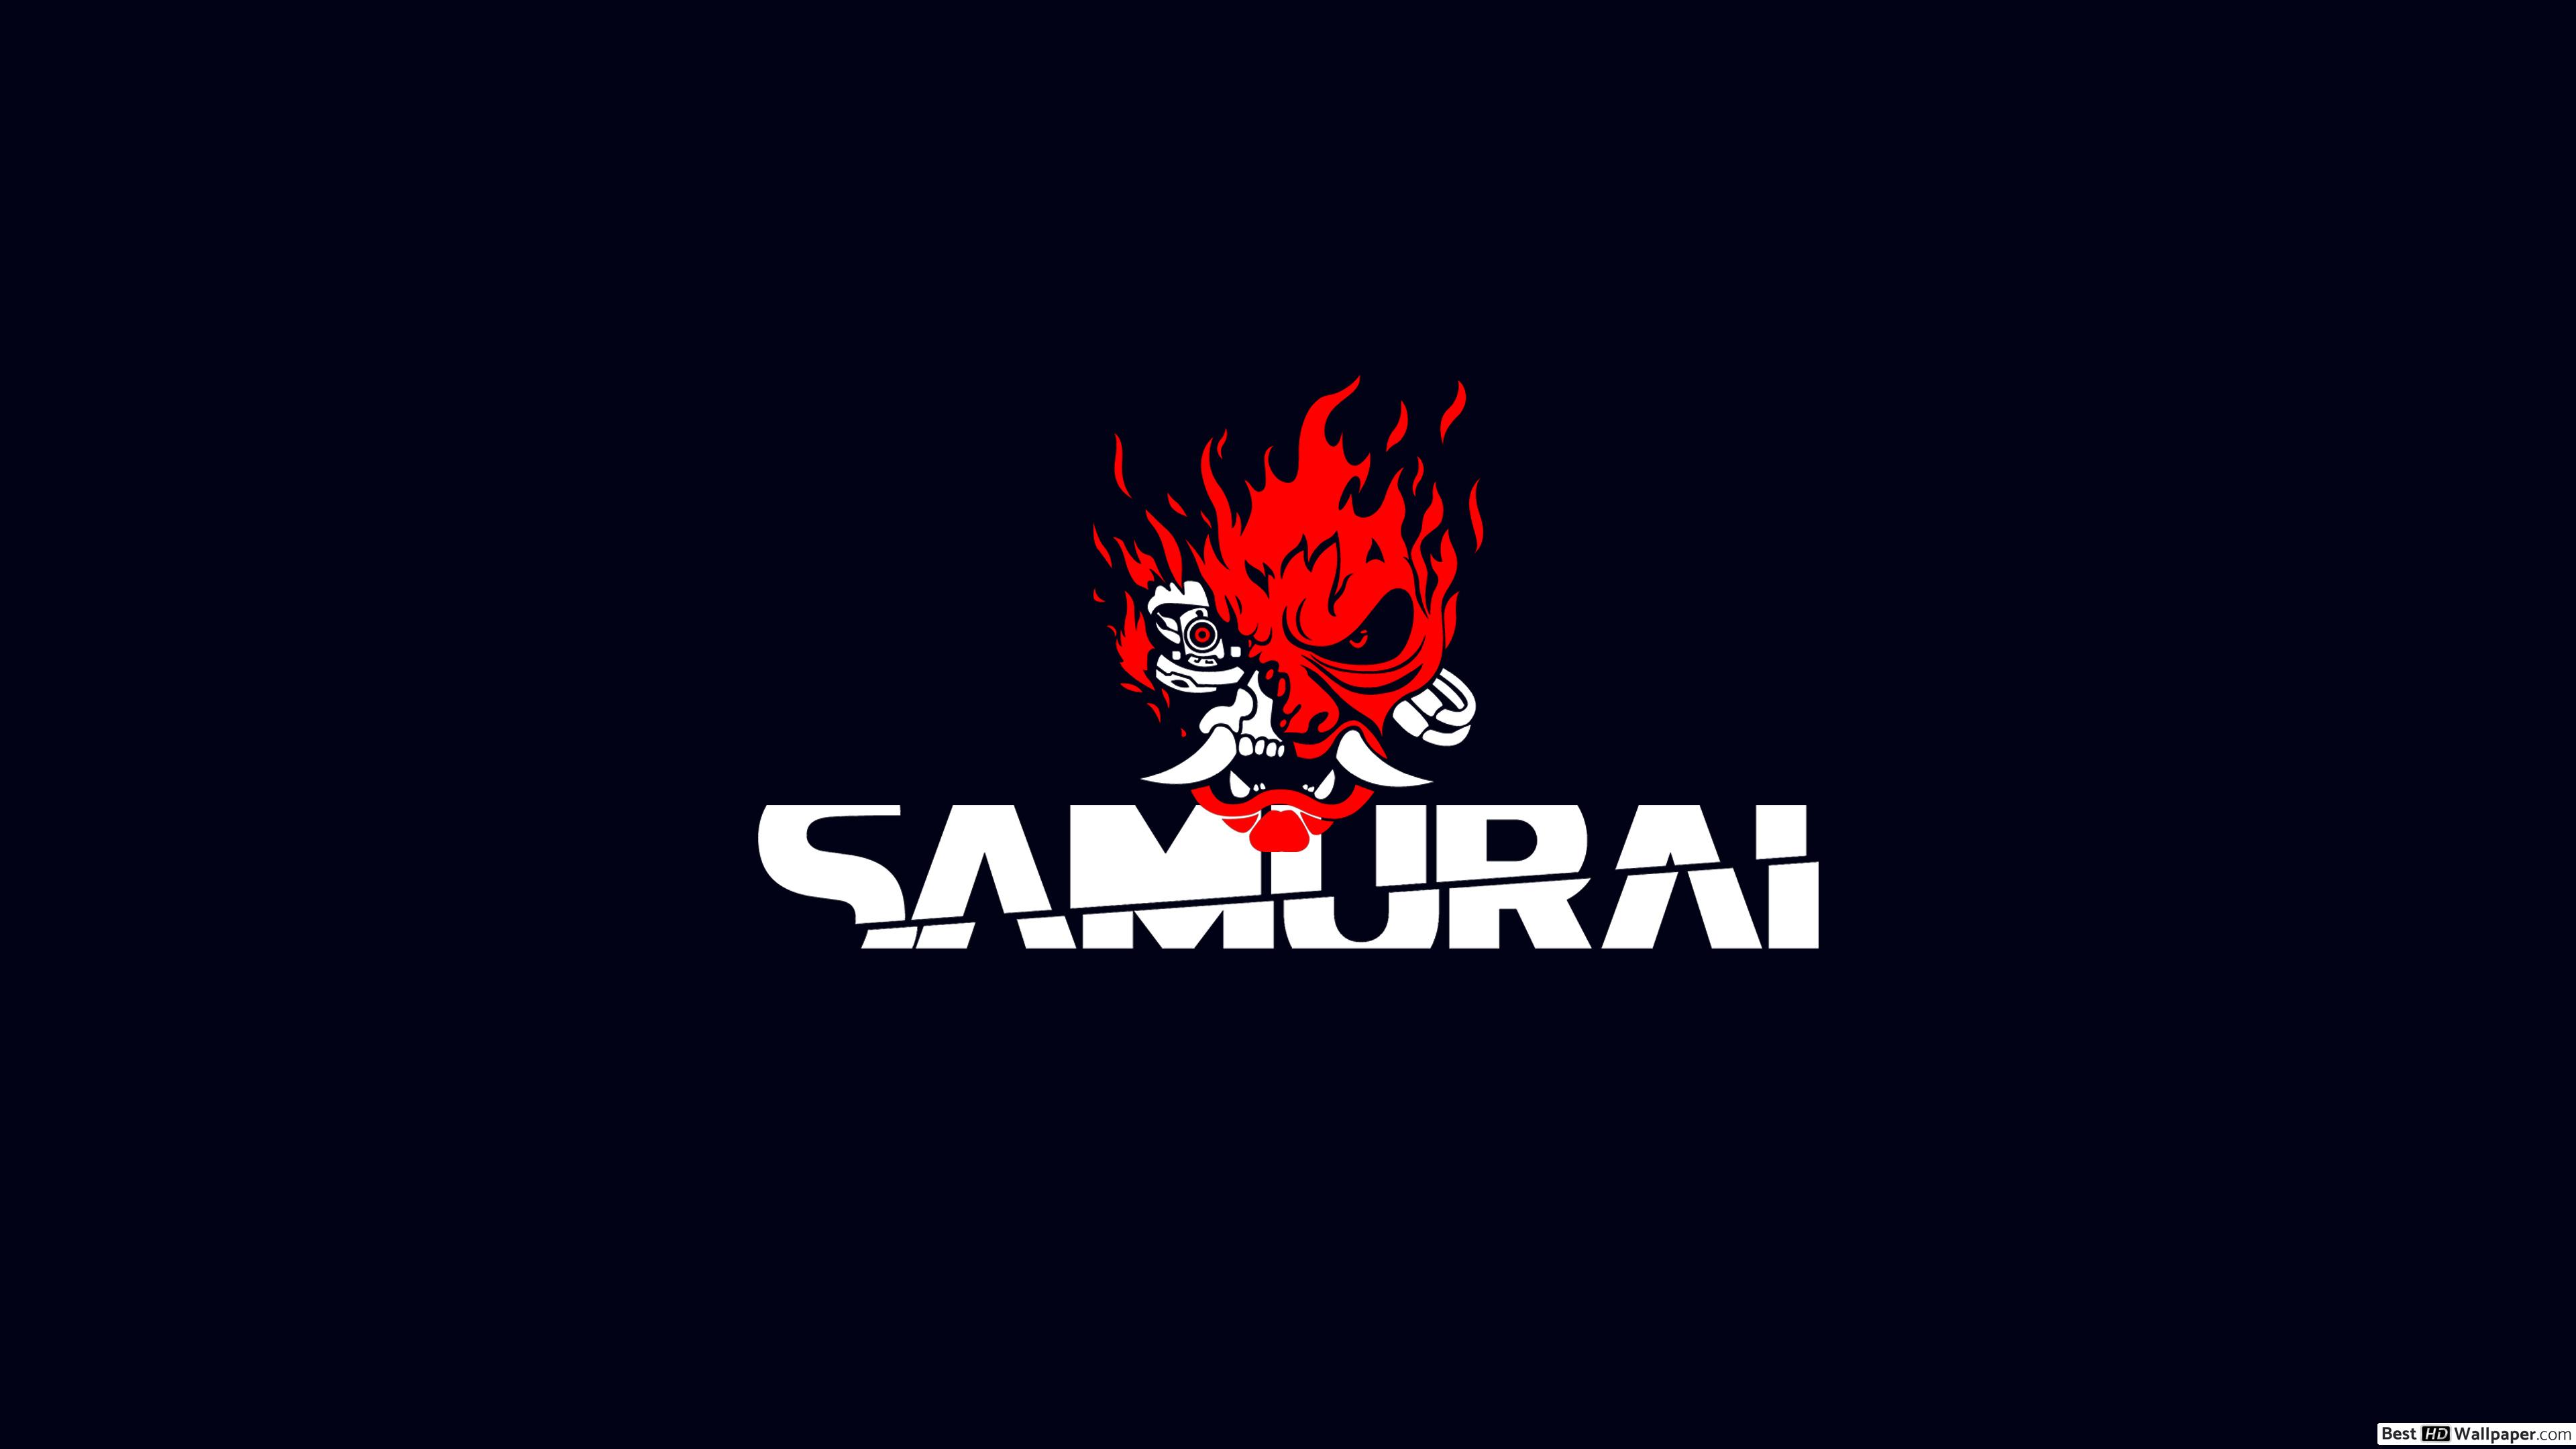 Cyberpunk 2077' Video Game [Samurai Logo] HD wallpaper download